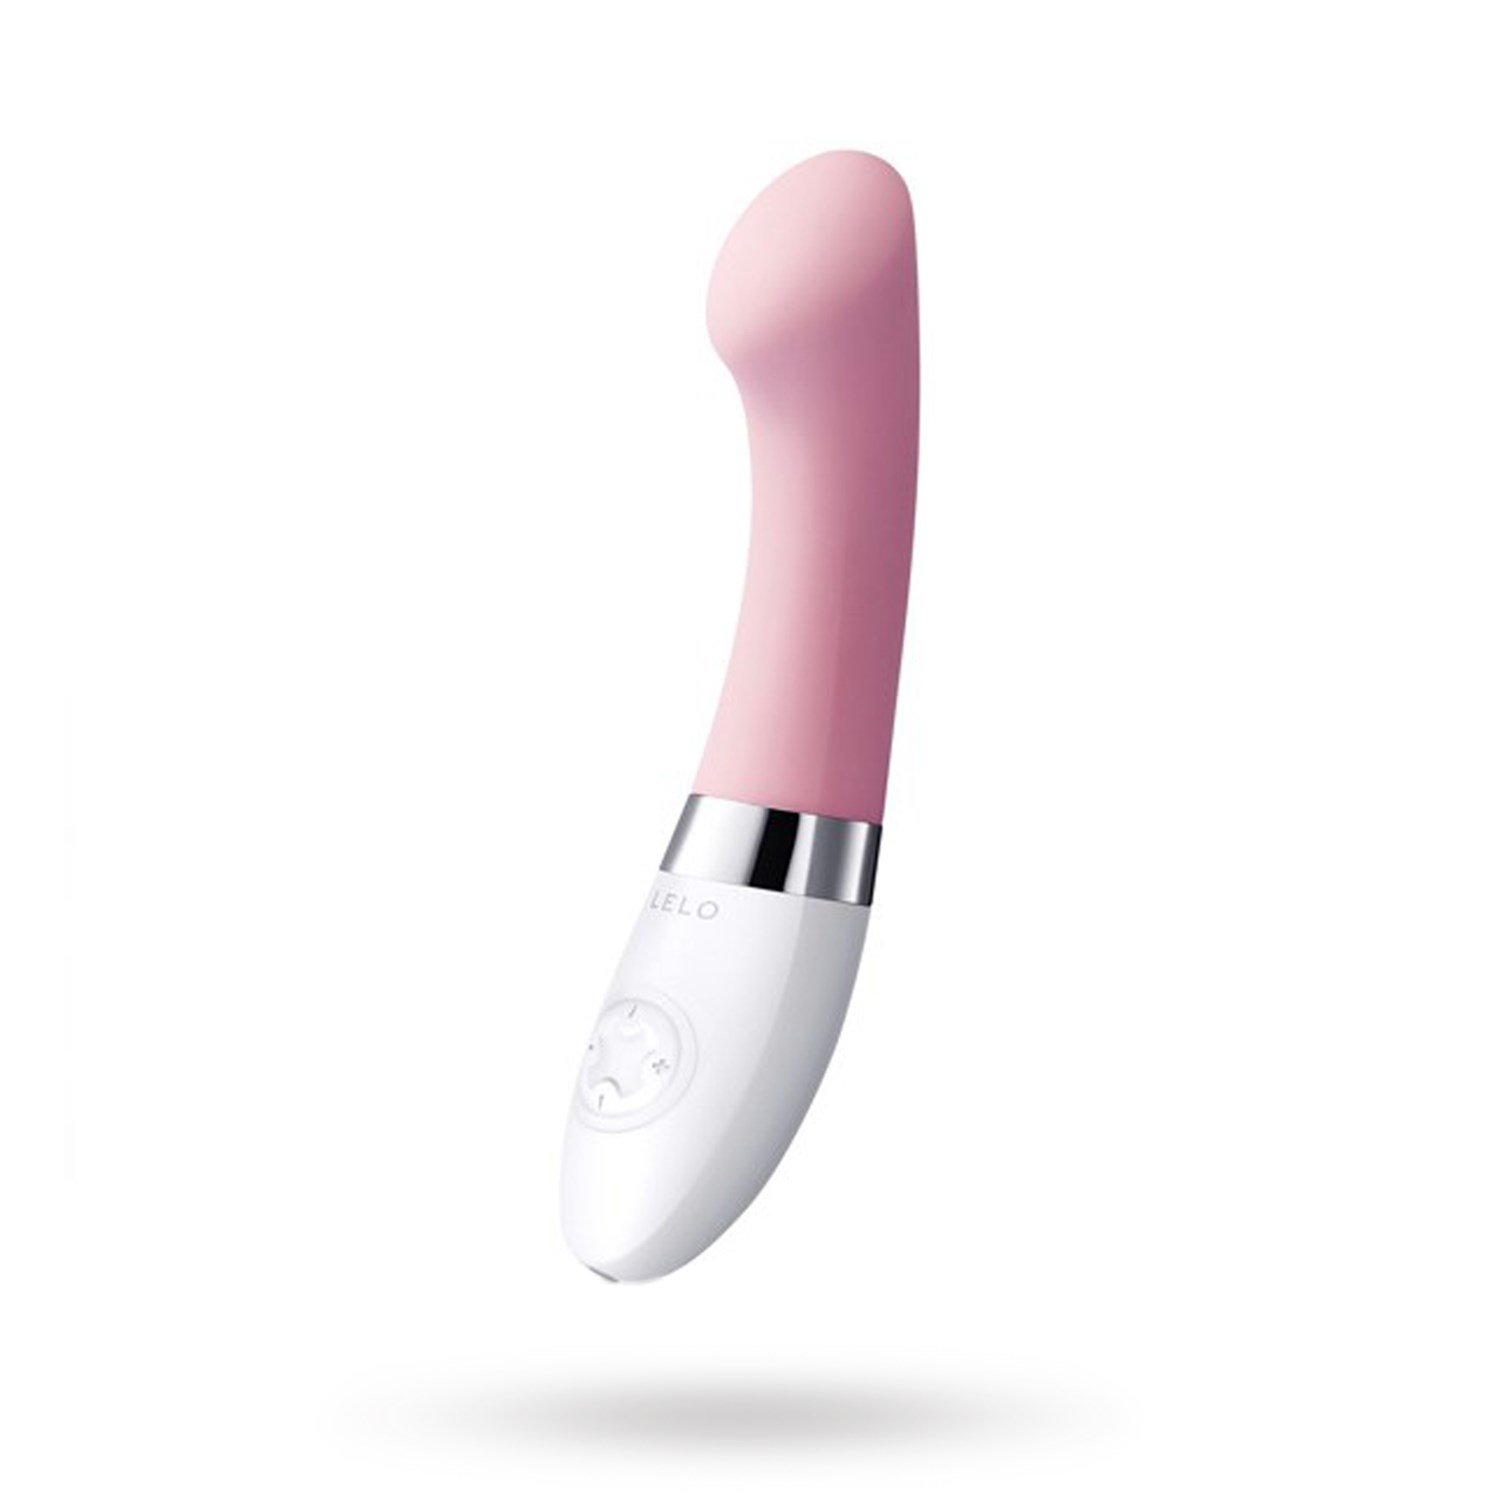 Gigi 2 Pink - Rechargeable G-spot Vibrator